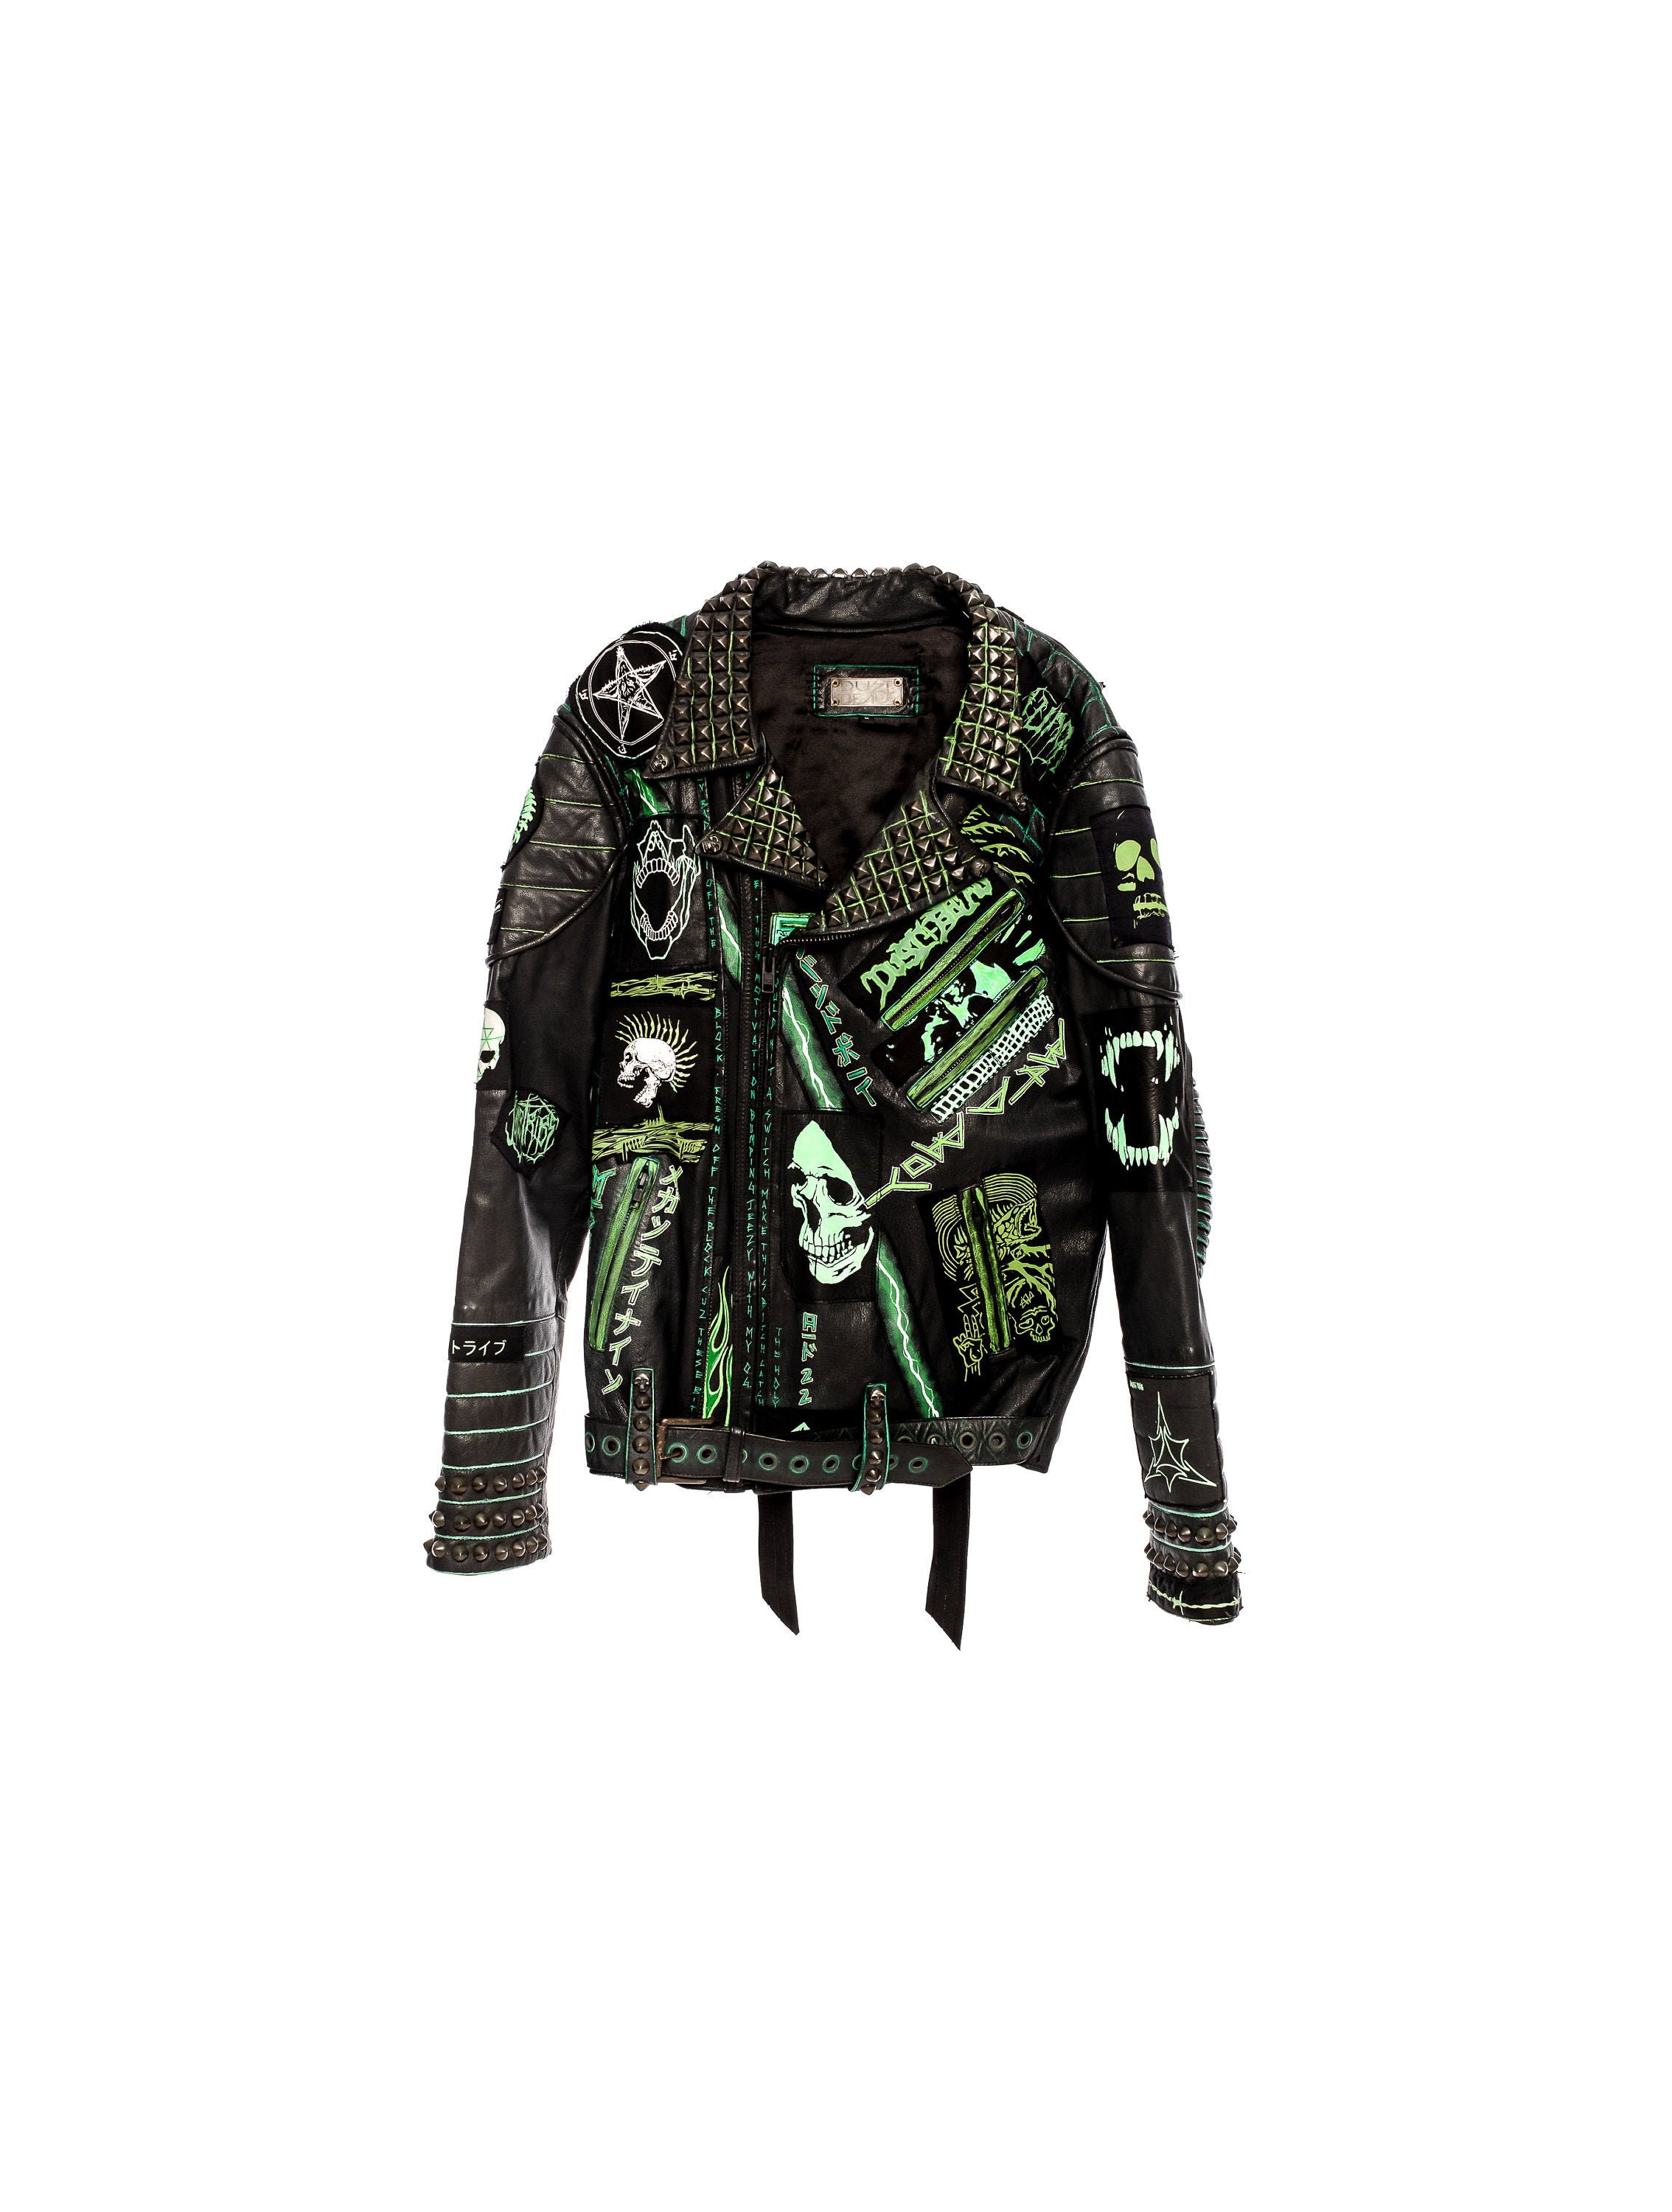 Cybernetic Matrix Digital Bad Boy Studded Painted Leather Jacket